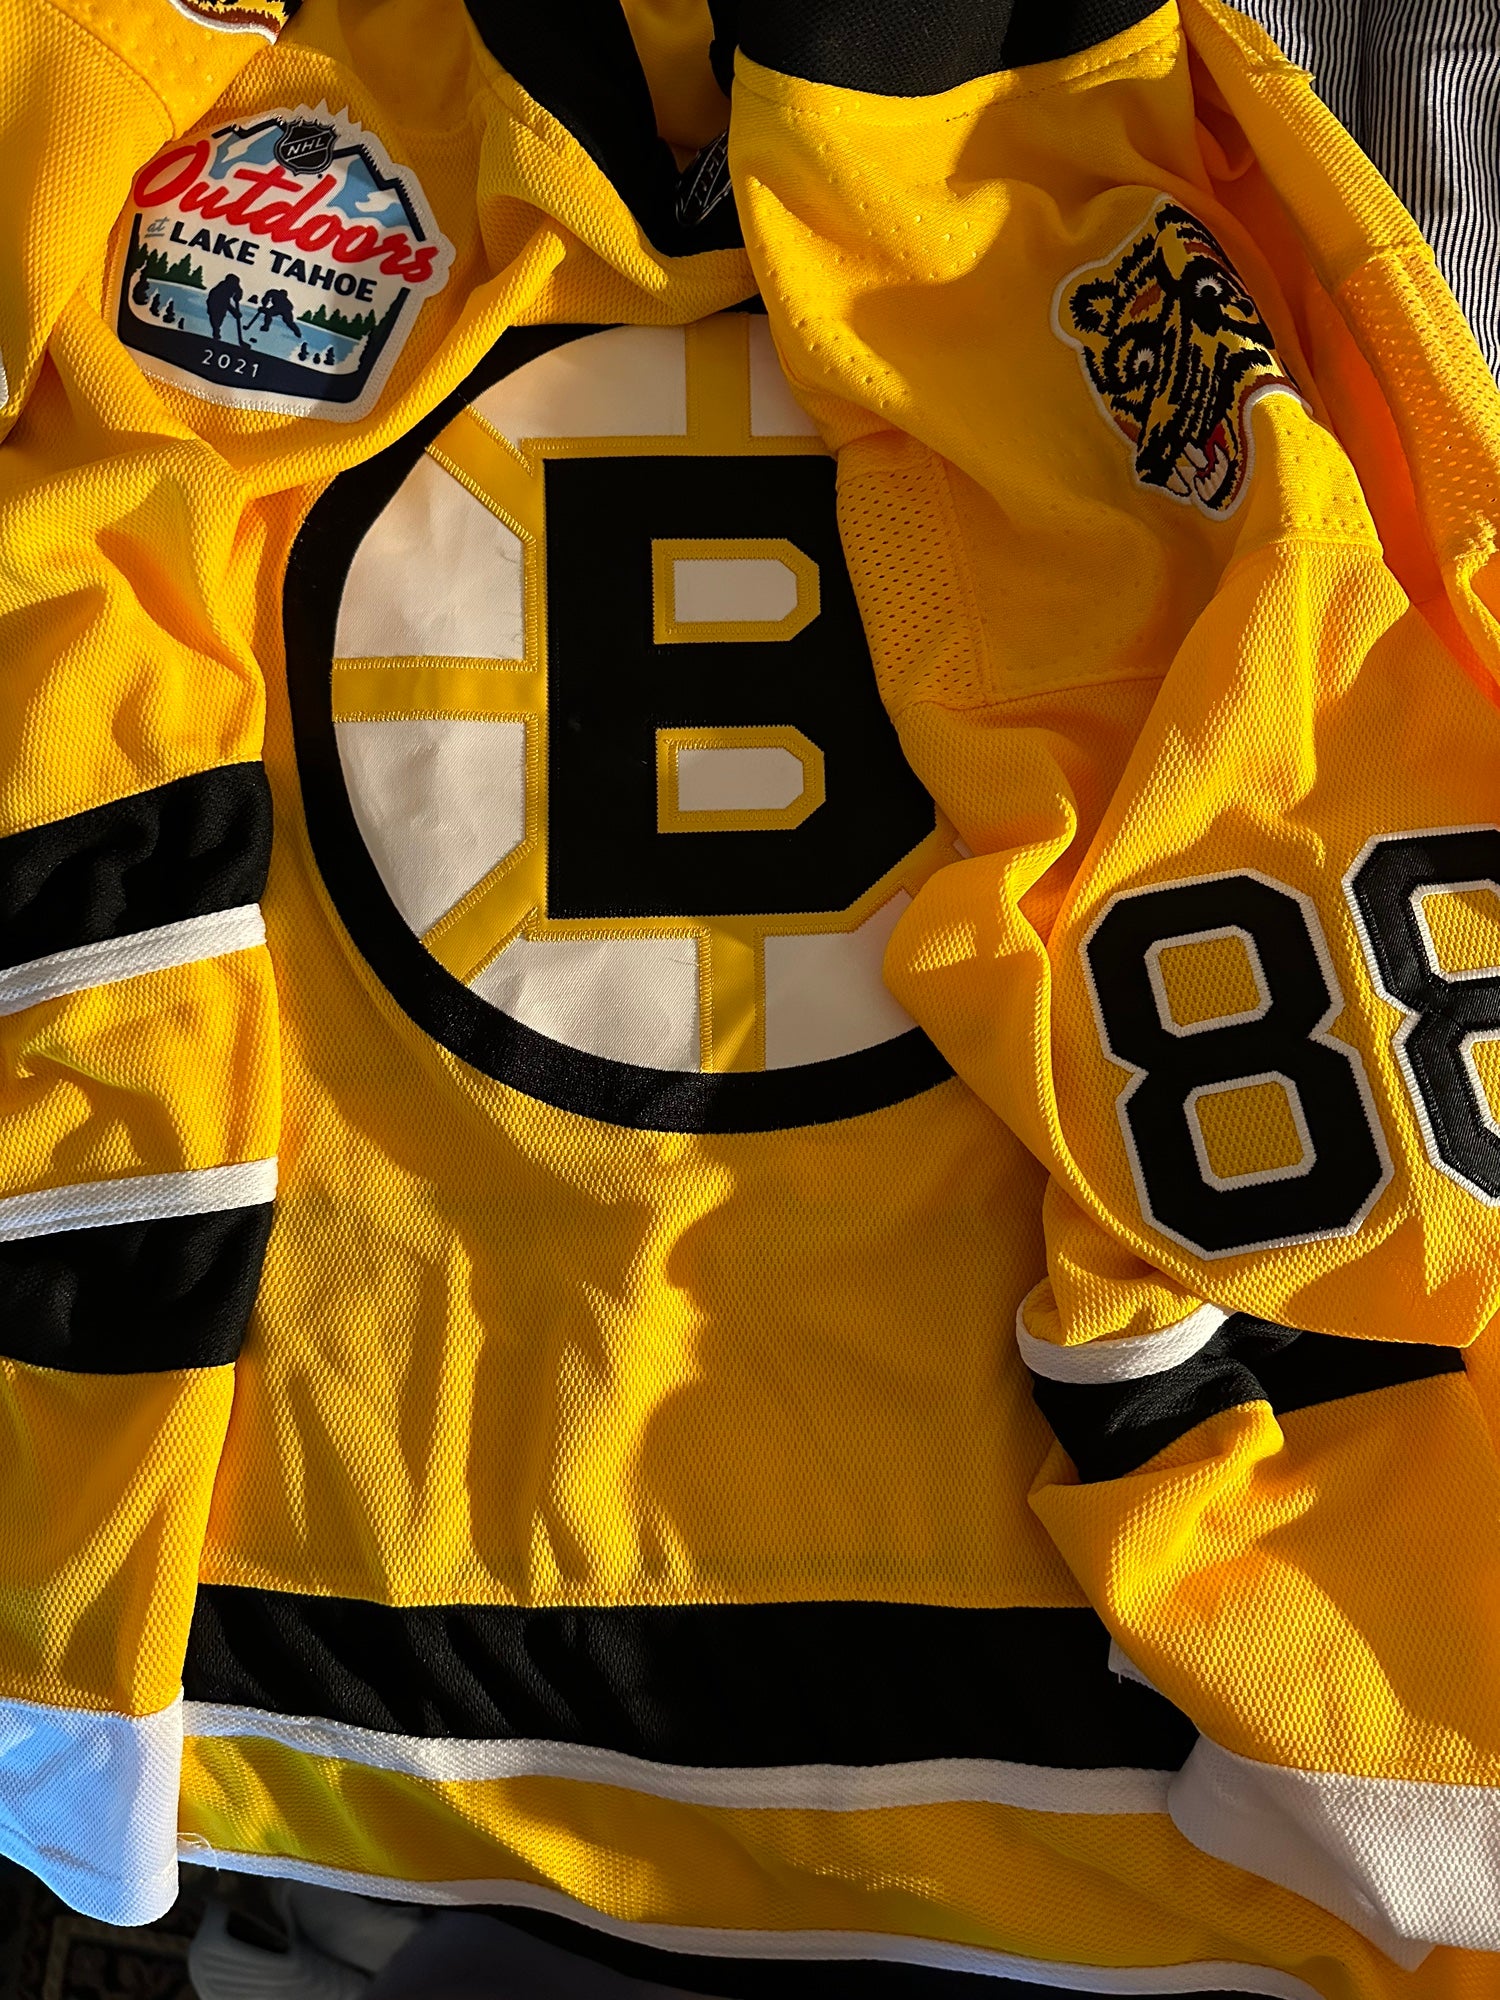 David Pastrnak Boston Bruins reverse retro jersey size 50/medium